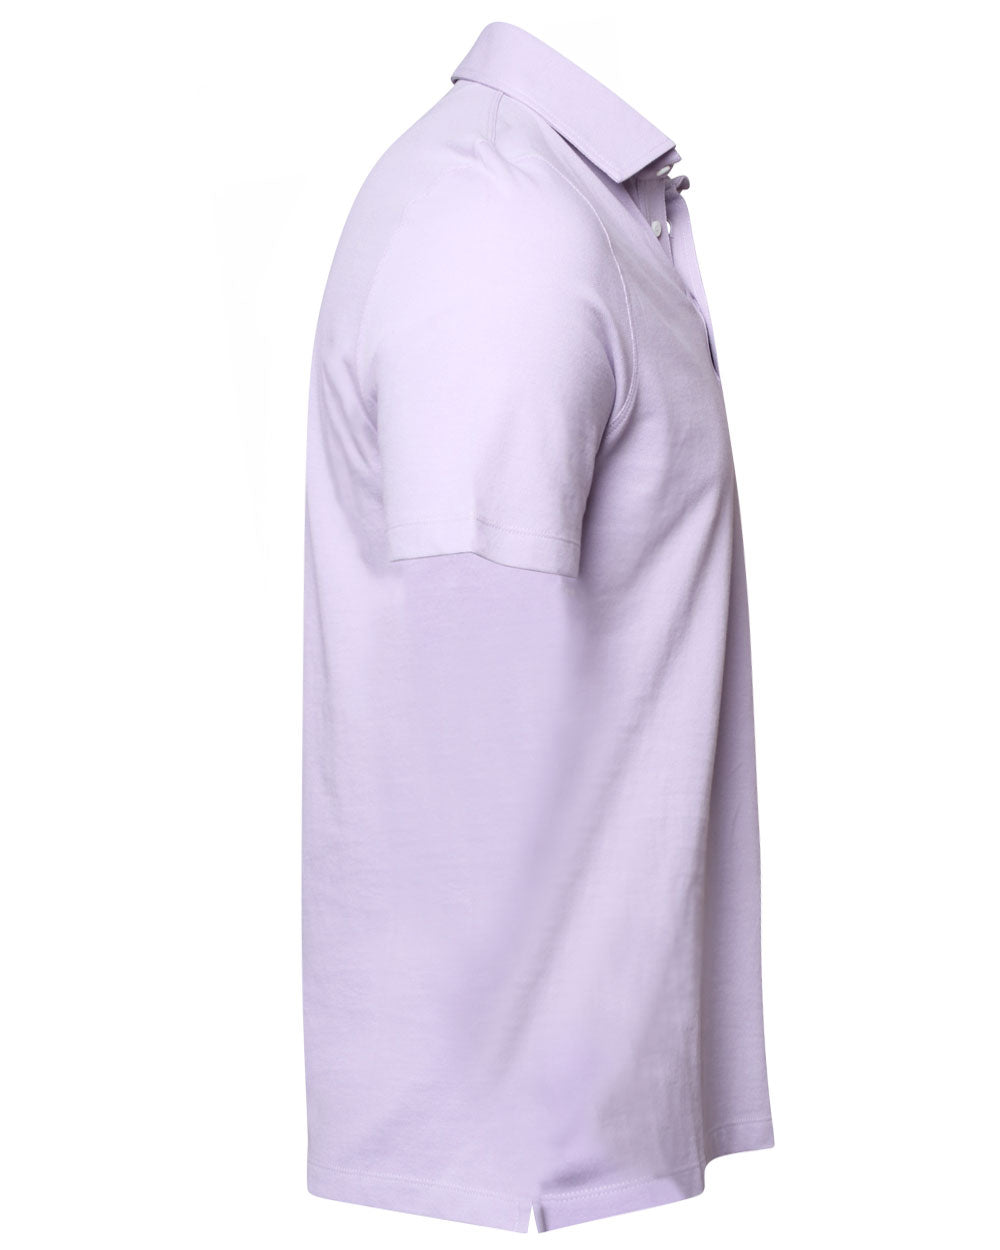 Light Purple Jersey Polo